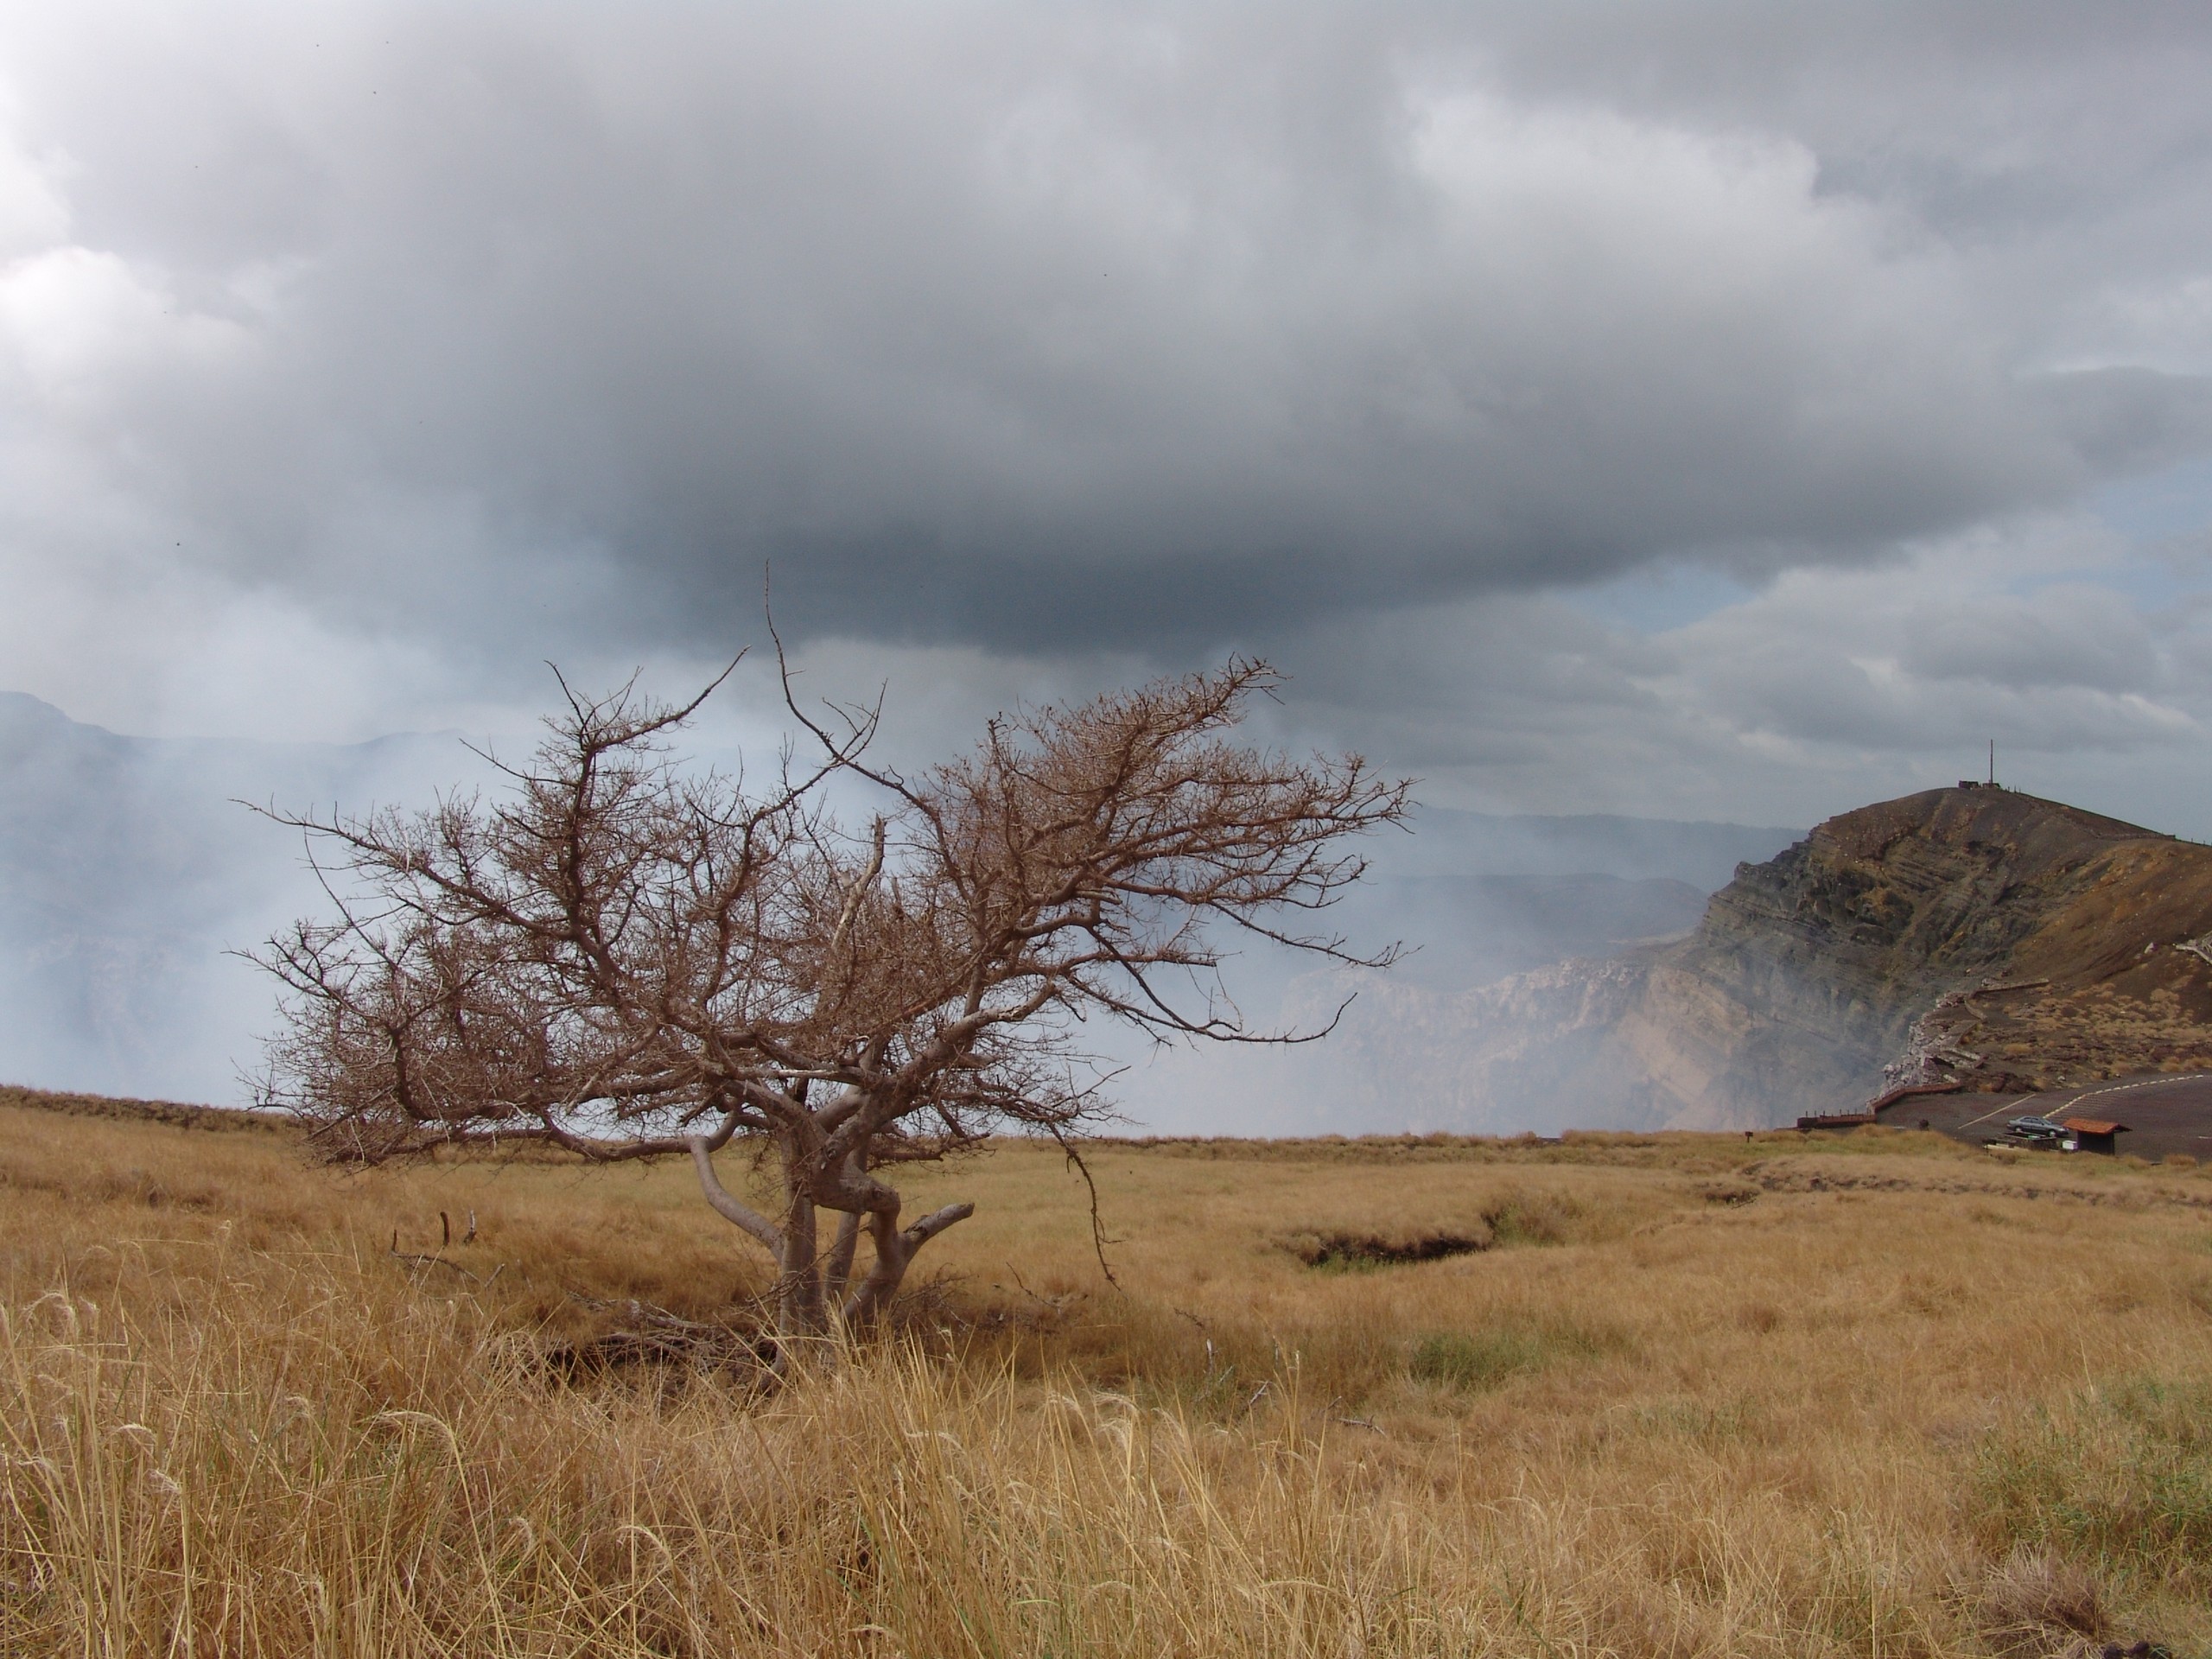 Masaya Volcano National Park